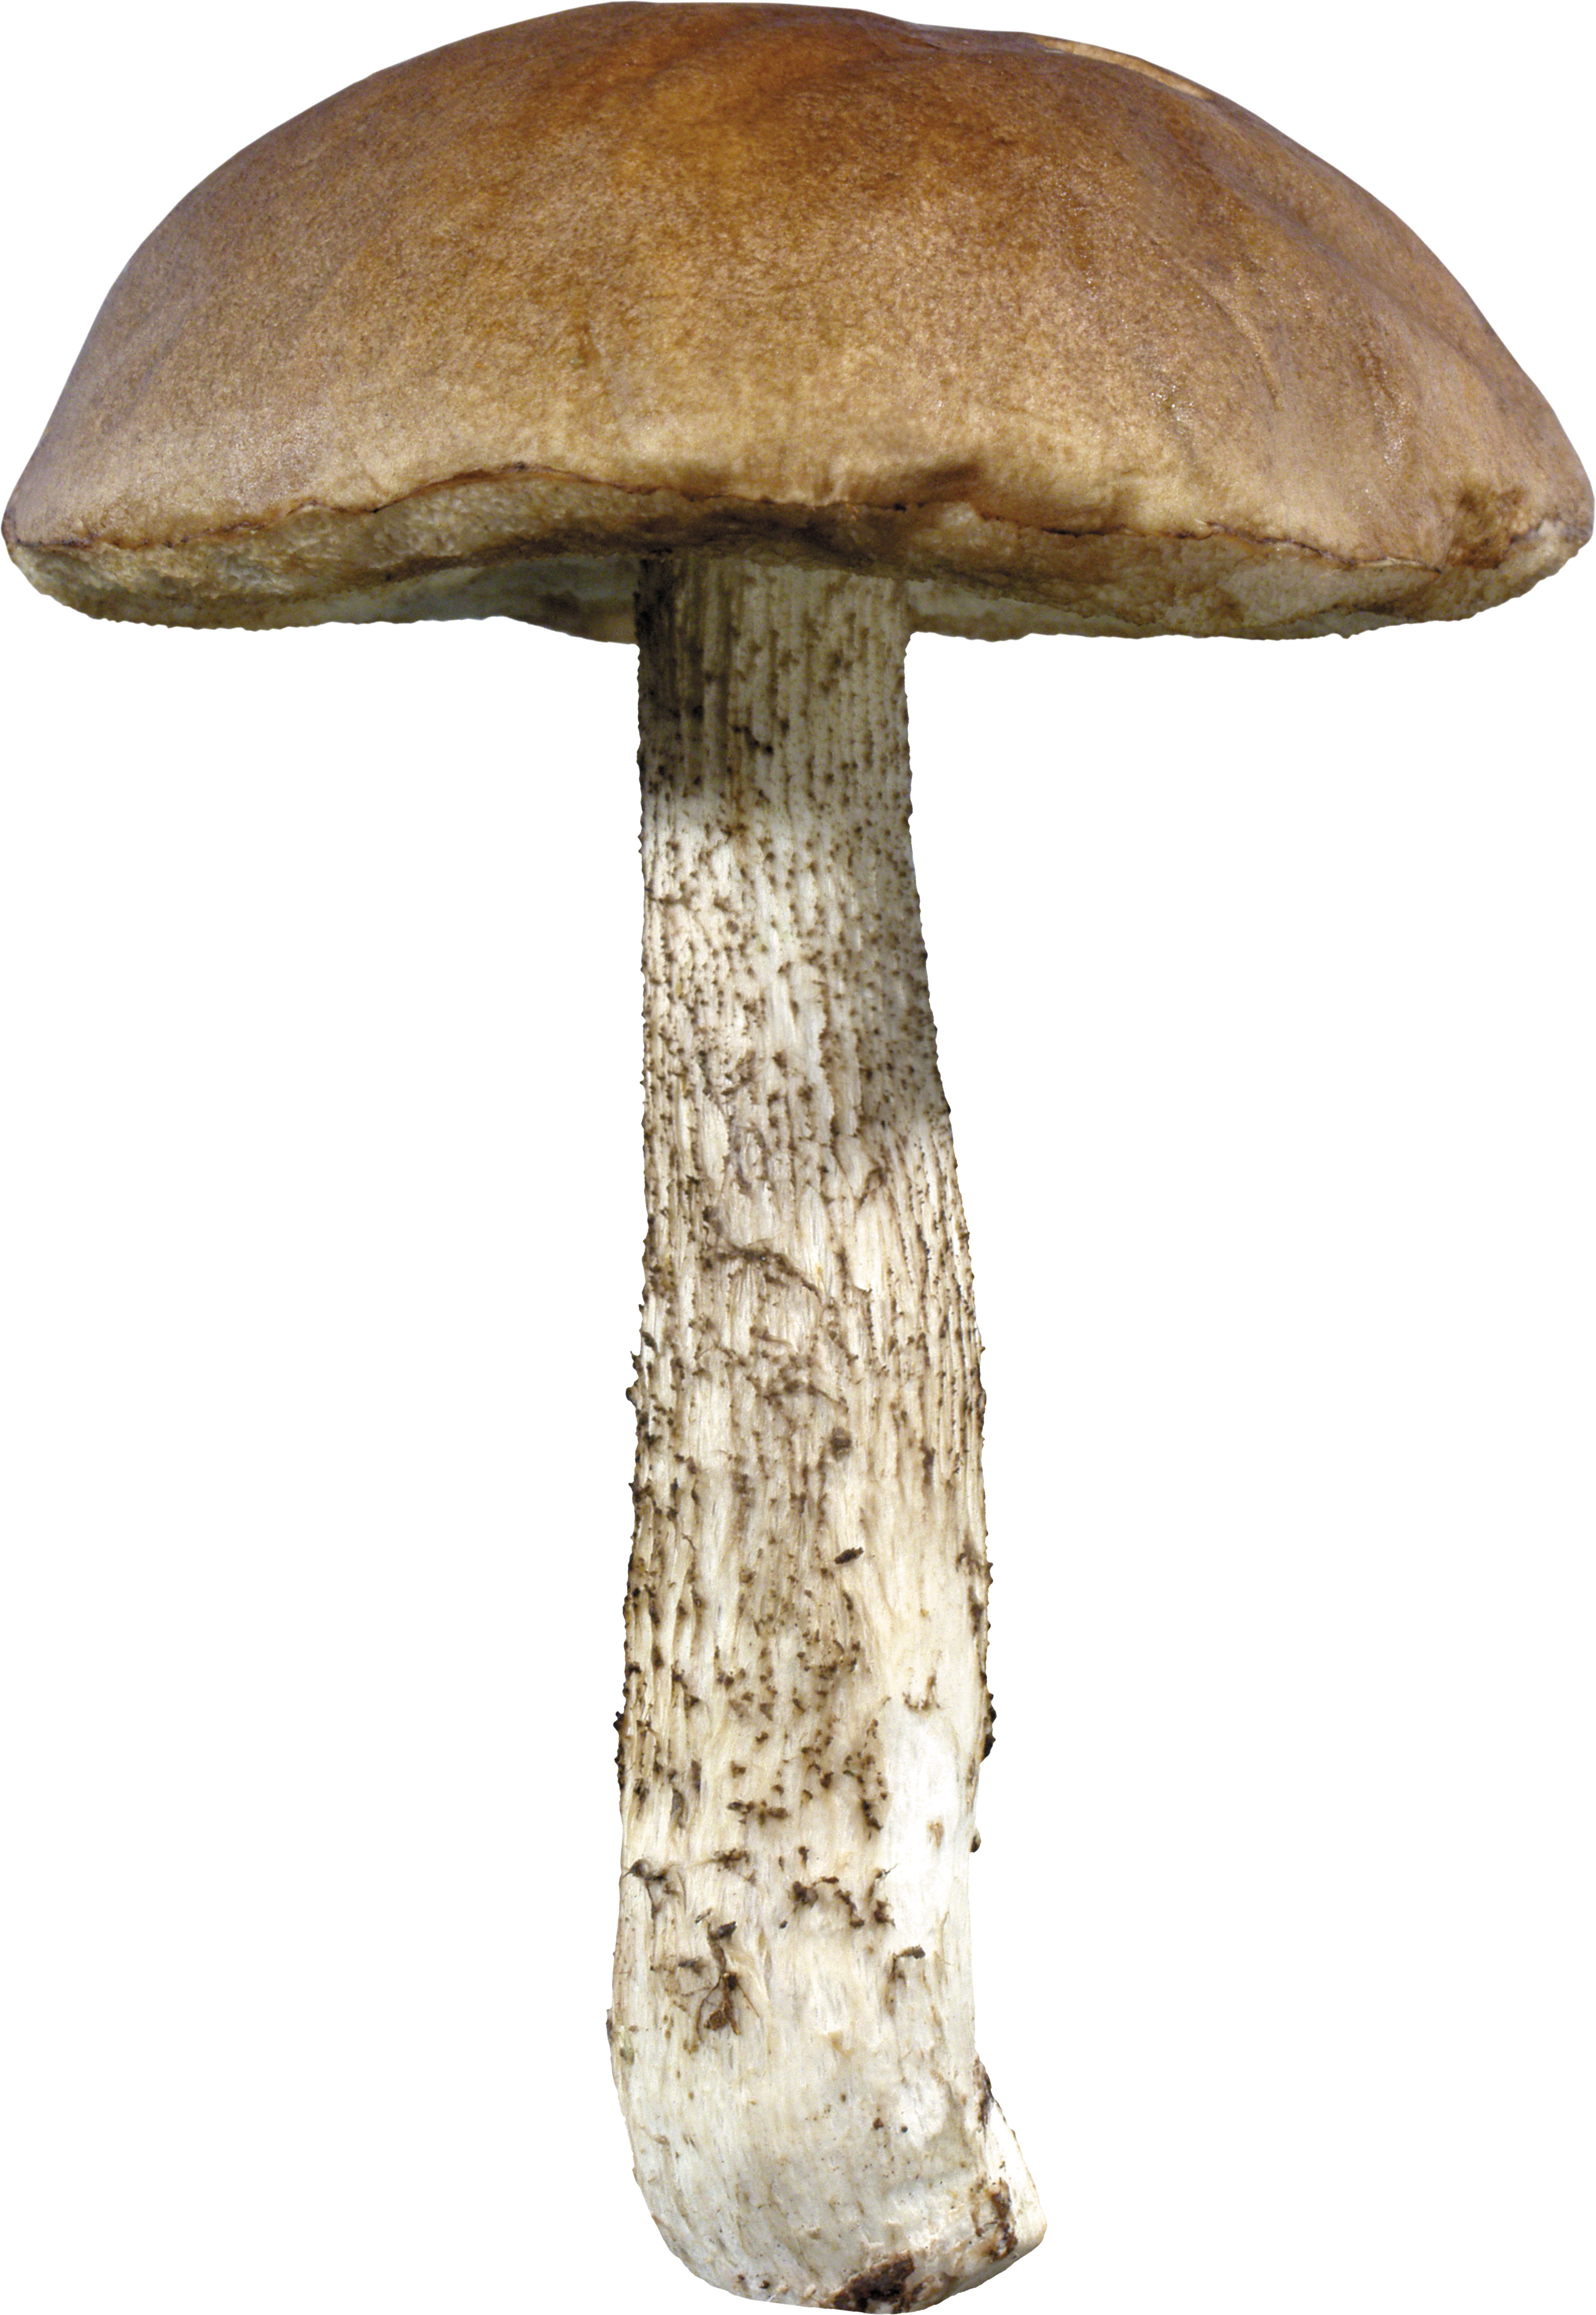 Mushroom Png Image - Mushroom, Transparent background PNG HD thumbnail